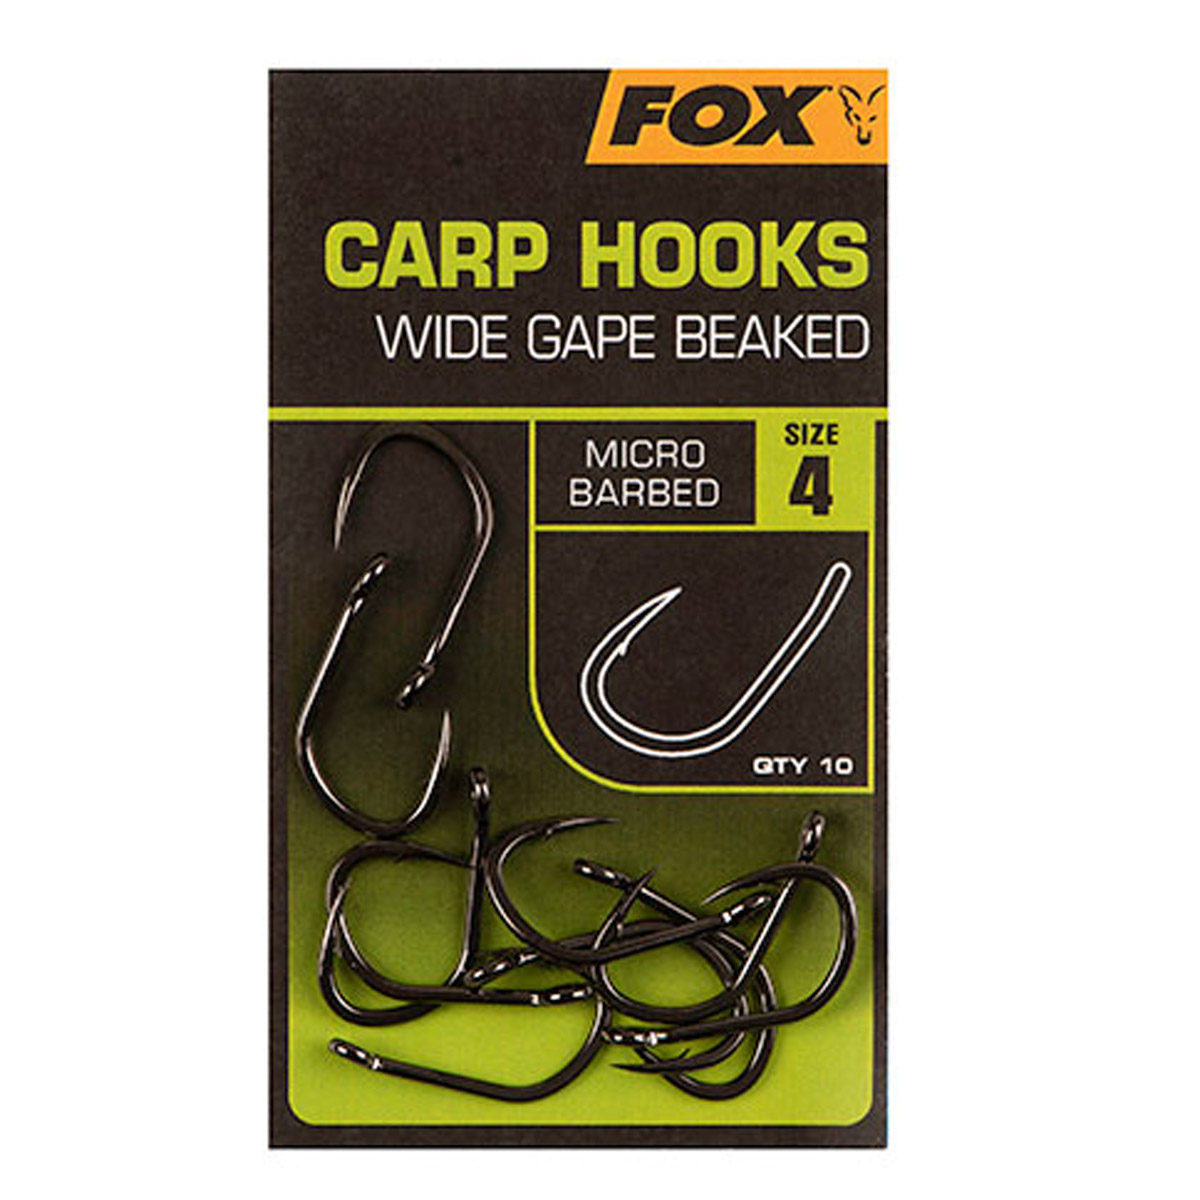 Fox Carp Hook WIDE GAPE BEAKED